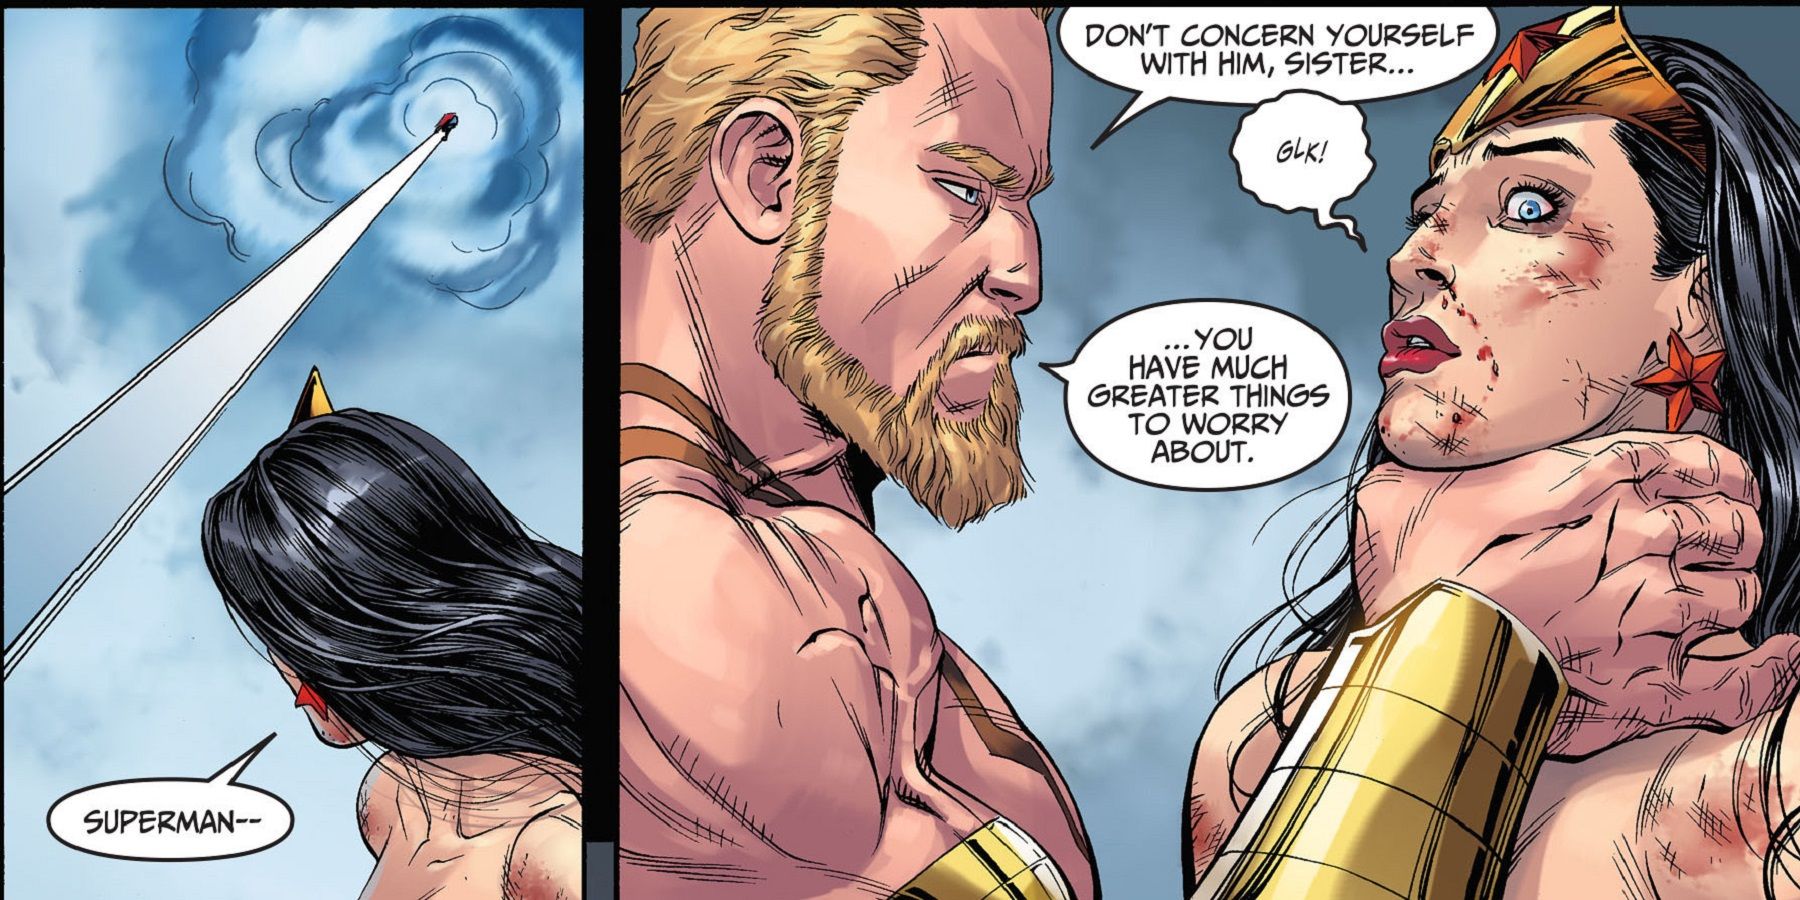 Hercules beats Superman and Wonder Woman in the Injustice comics